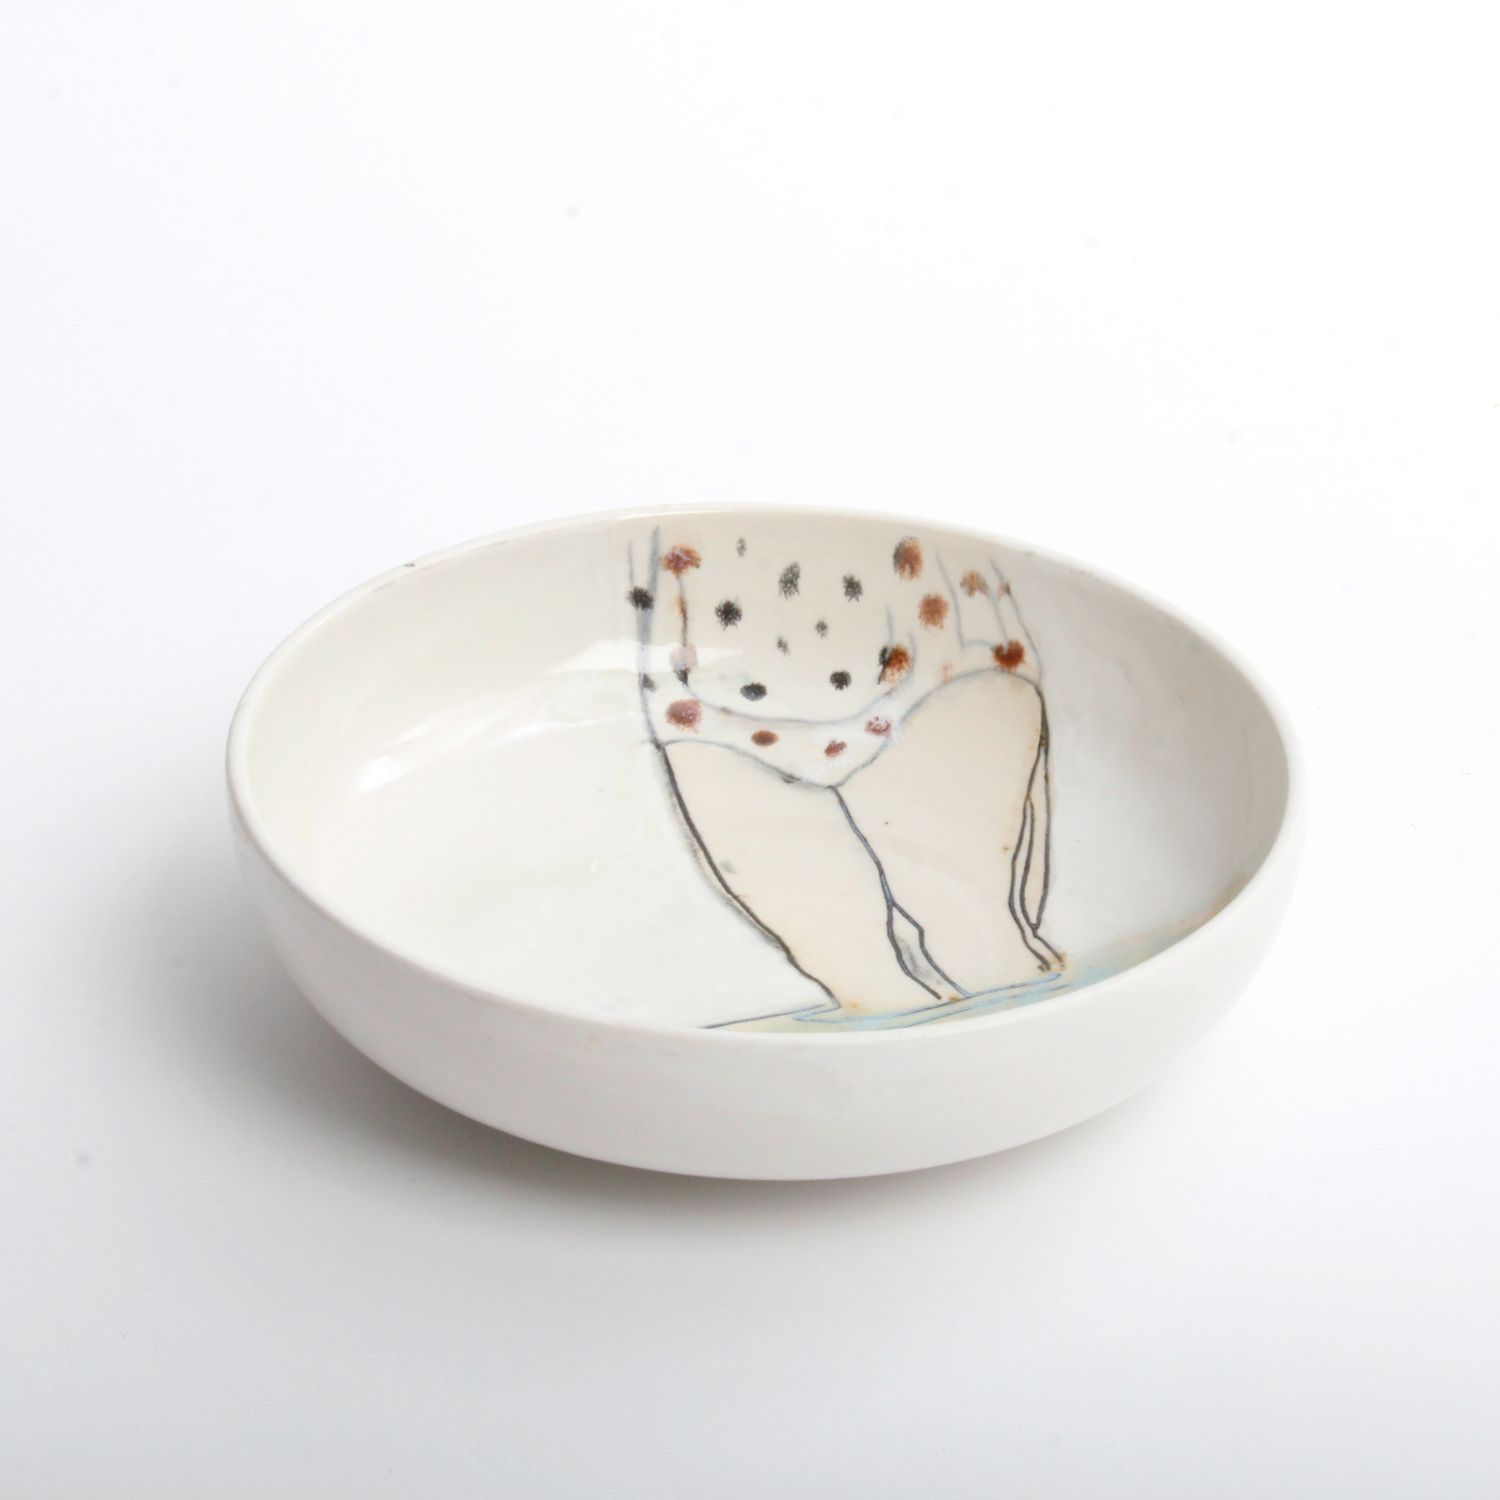 Lindsay Gravelle: Swimmer bowls Product Image 2 of 5